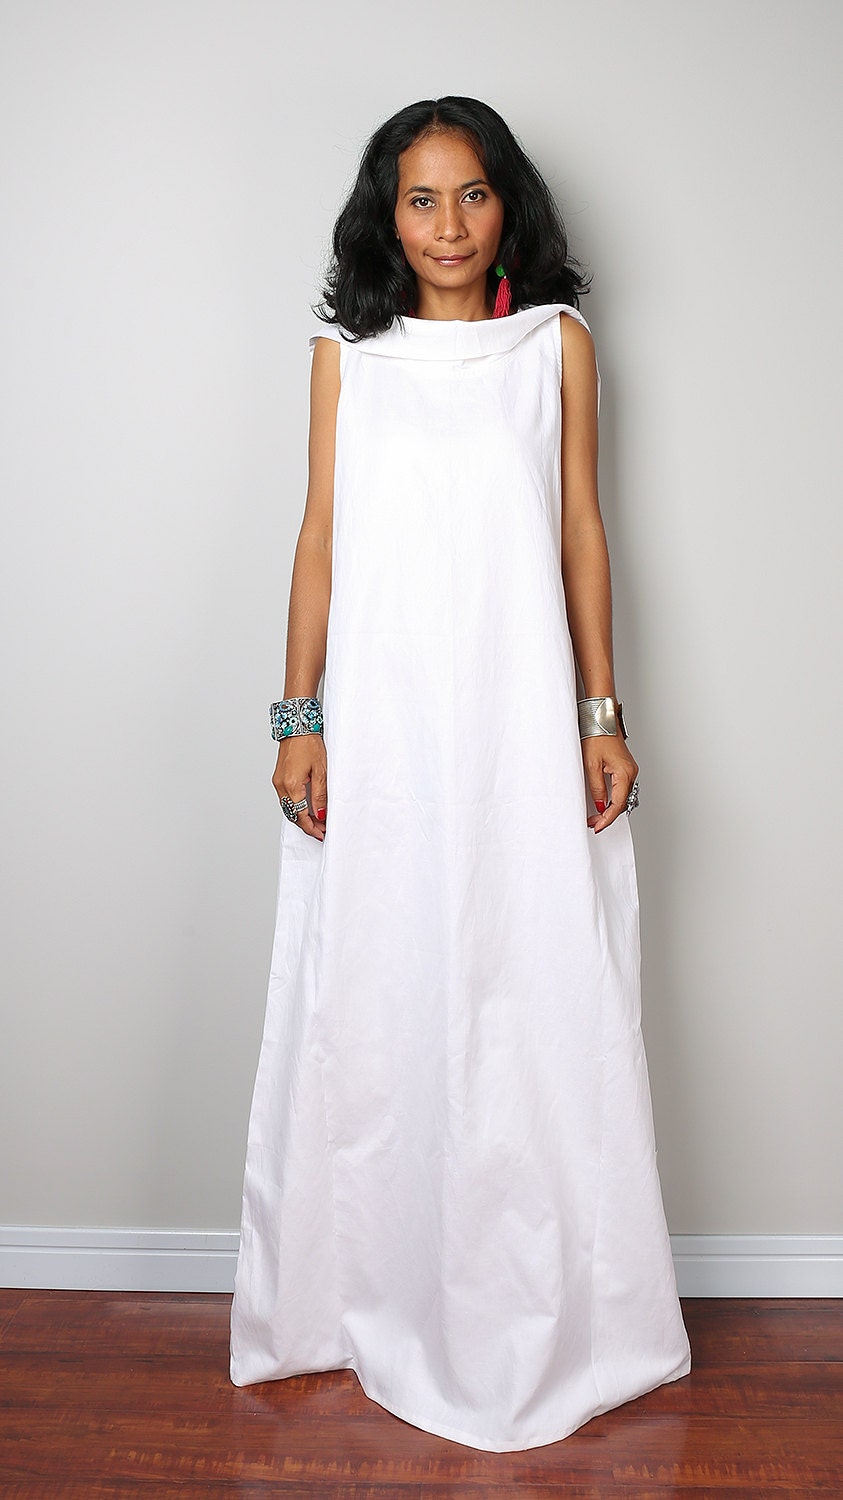 Linen Maxi Dress / Sleeveless White Dress with hood : The